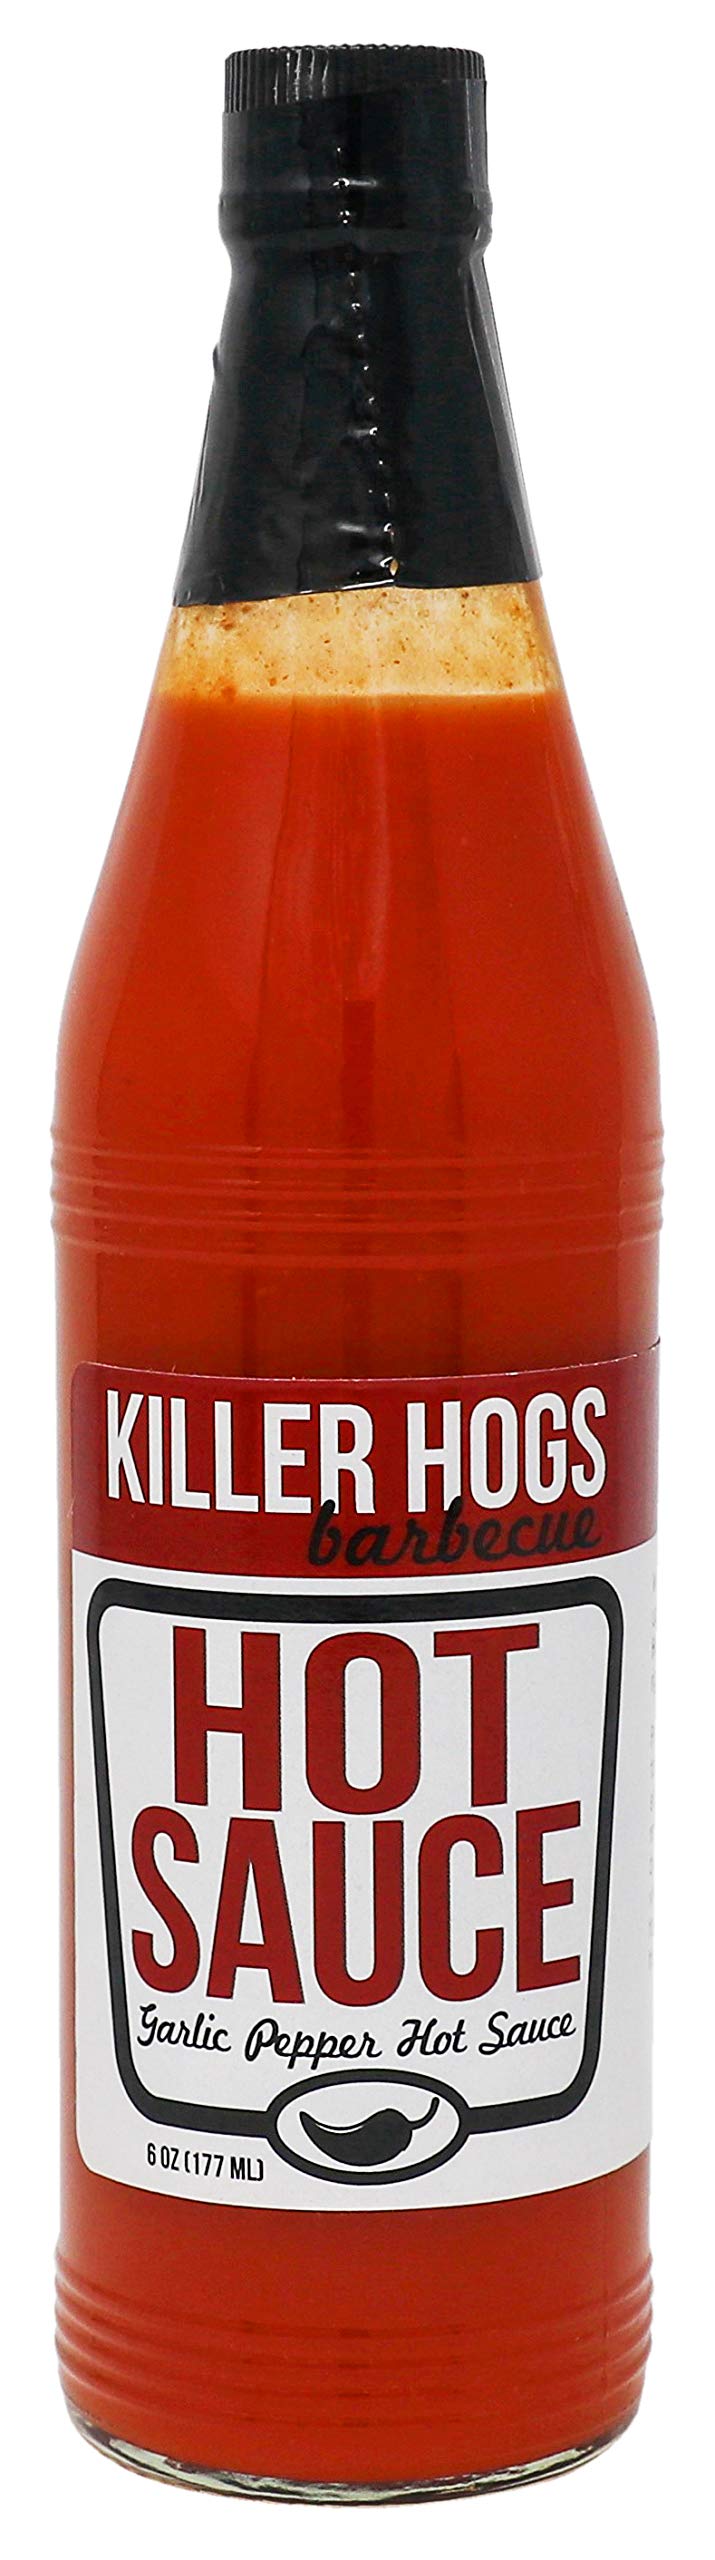 Hot-sauce-Killer-hogs-štiplava-omacka-pikant-omacka-na-gril